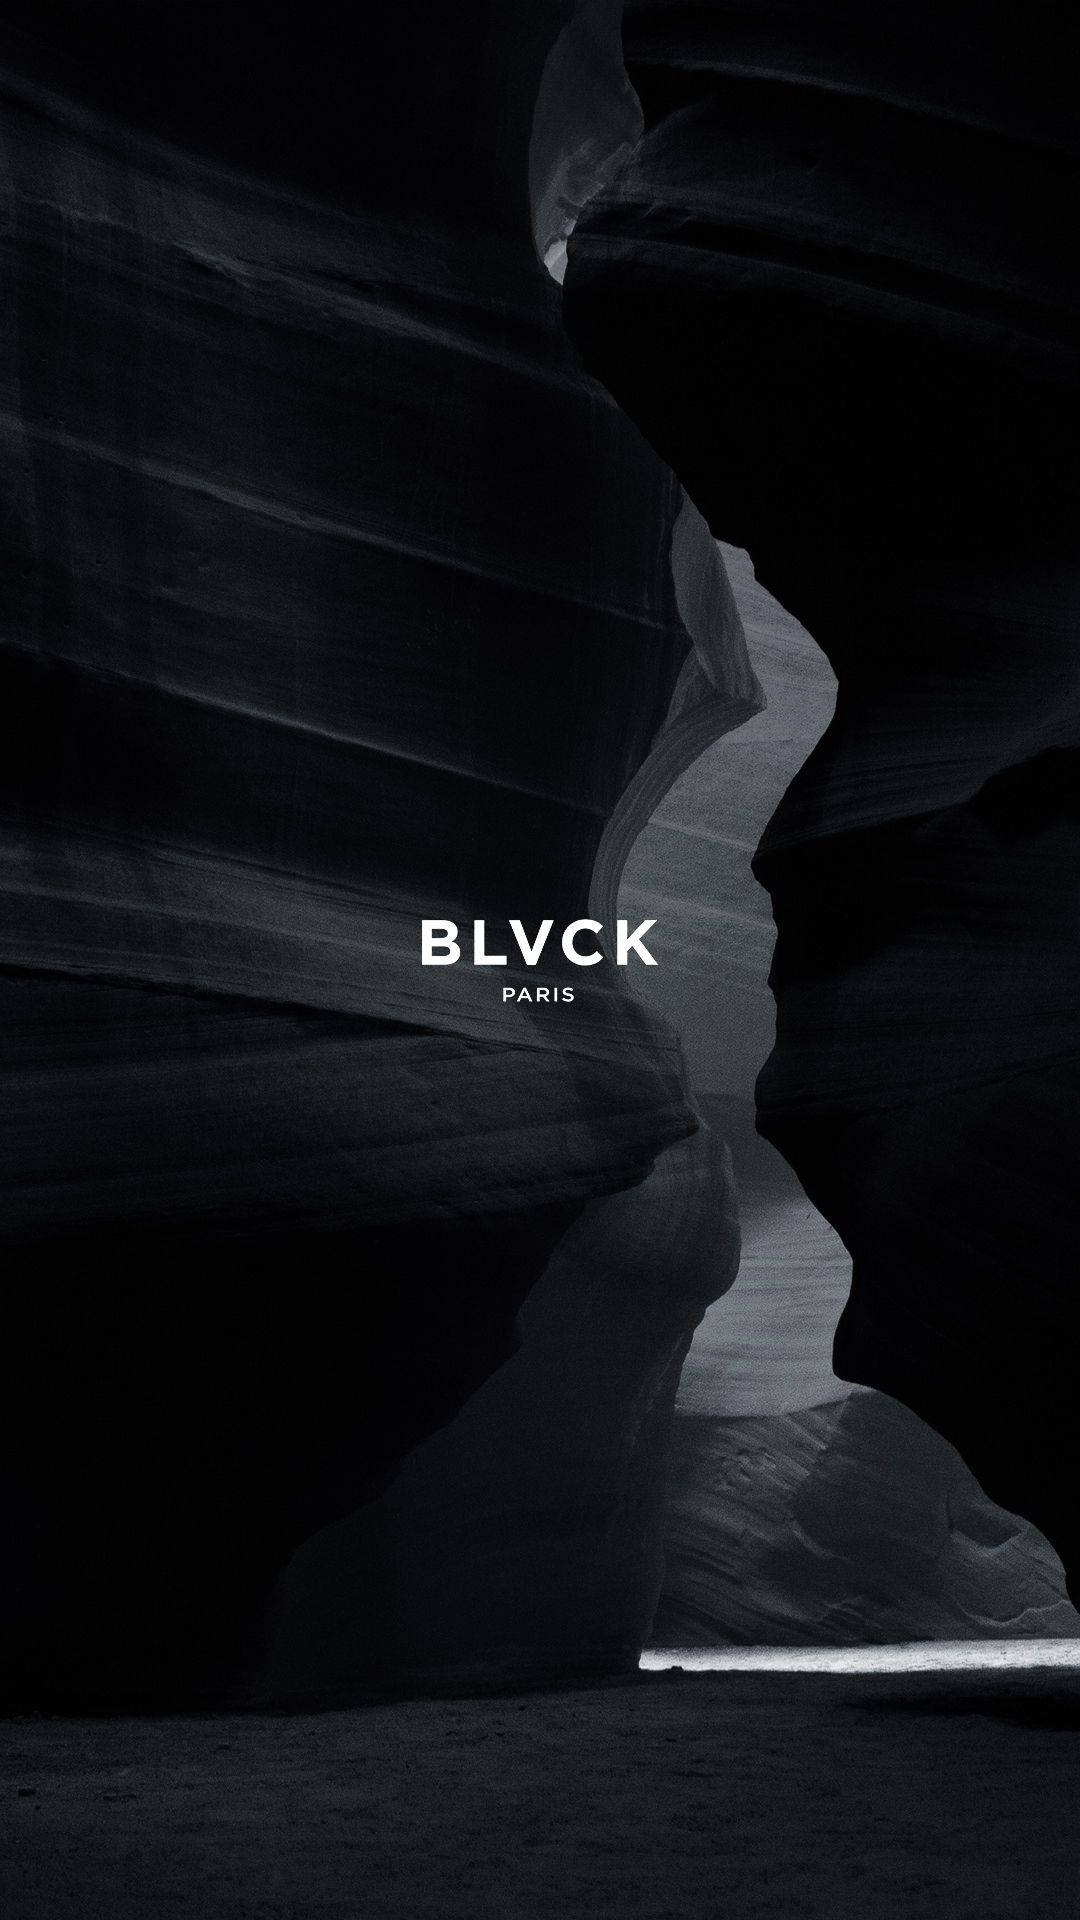 Lucetu Identidad: Blvck Paris Fondo de pantalla